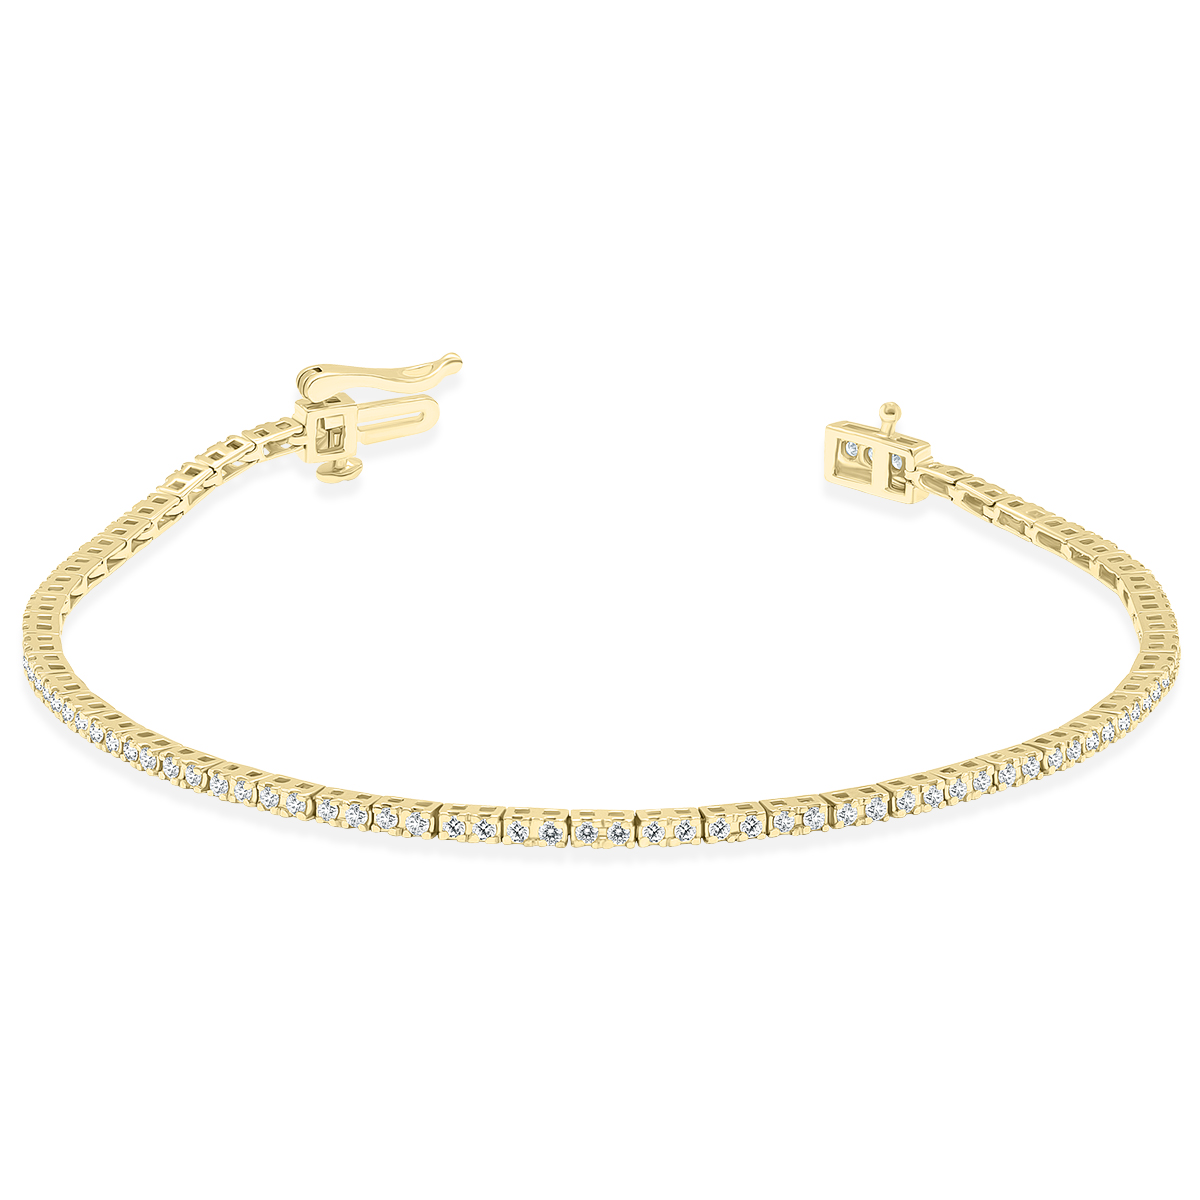 1 Carat TW Diamond Tennis Bracelet in 14K Yellow Gold